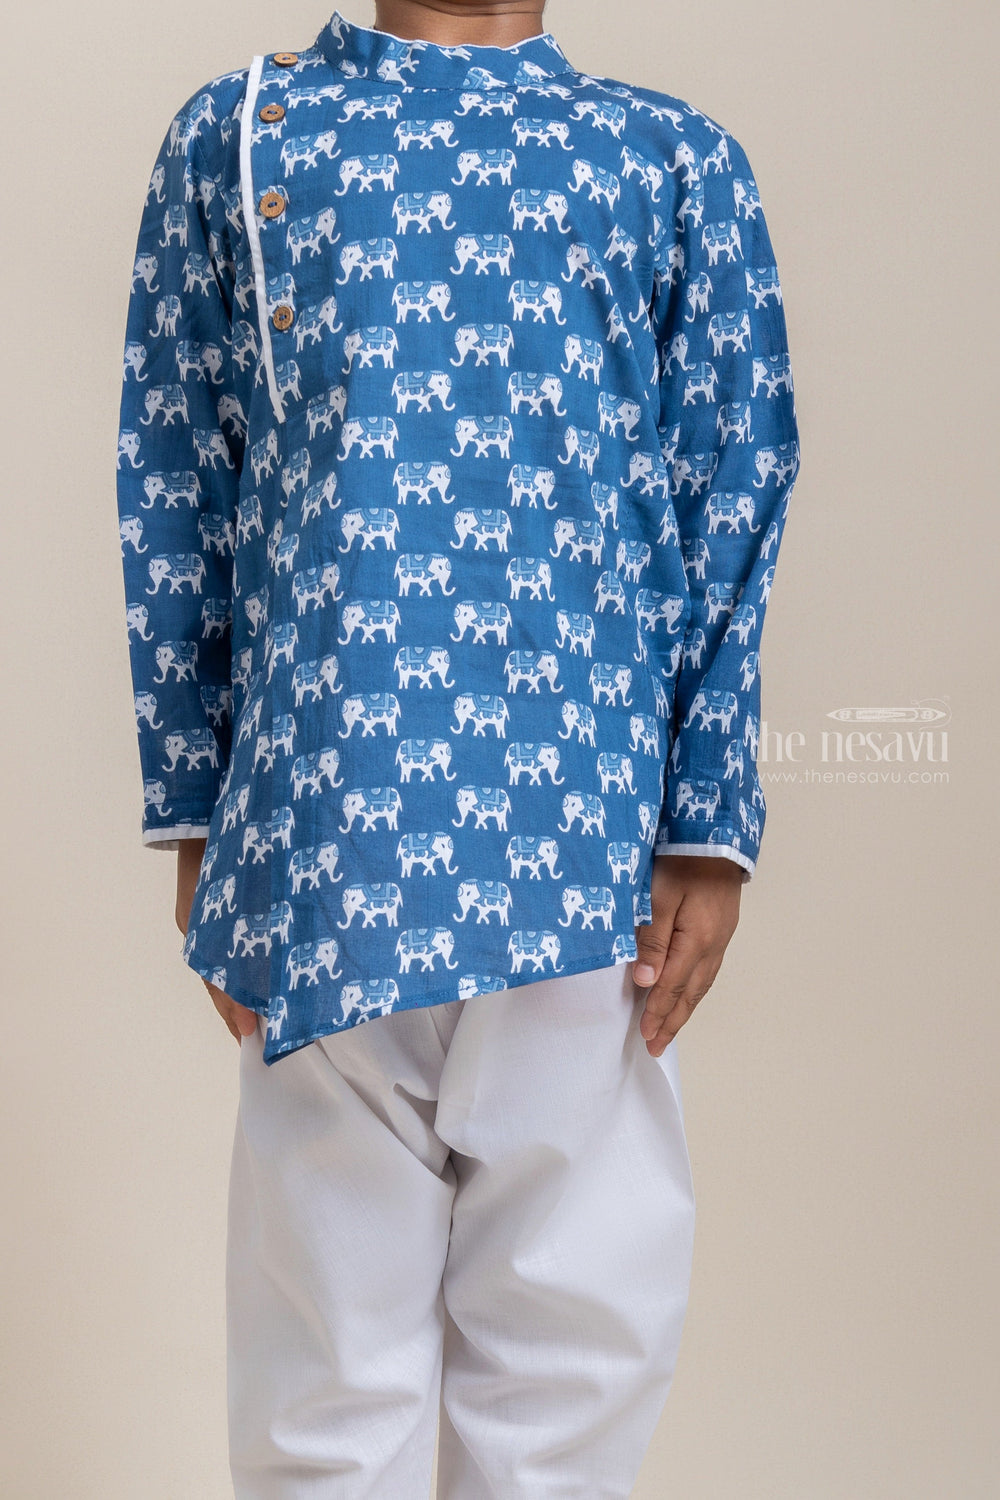 The Nesavu Ethnic Sets Attractive Animal Printed Blue Kurta With White Pant For Boys psr silks Nesavu